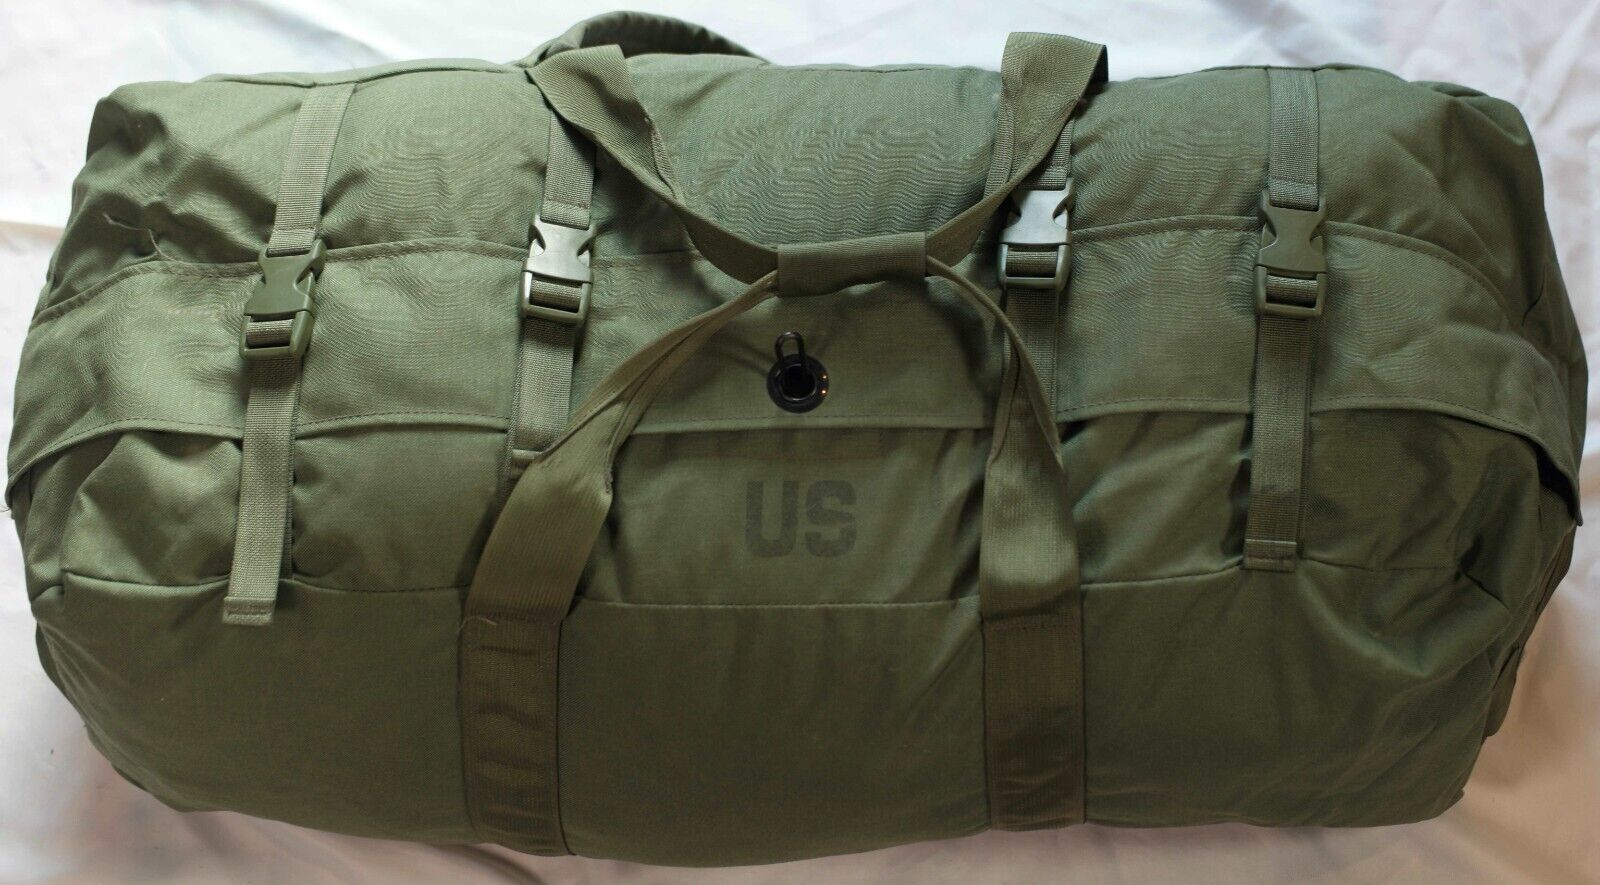 USGI Standard Duffel Bag, Current Issue US Military Sea Duffle Bag